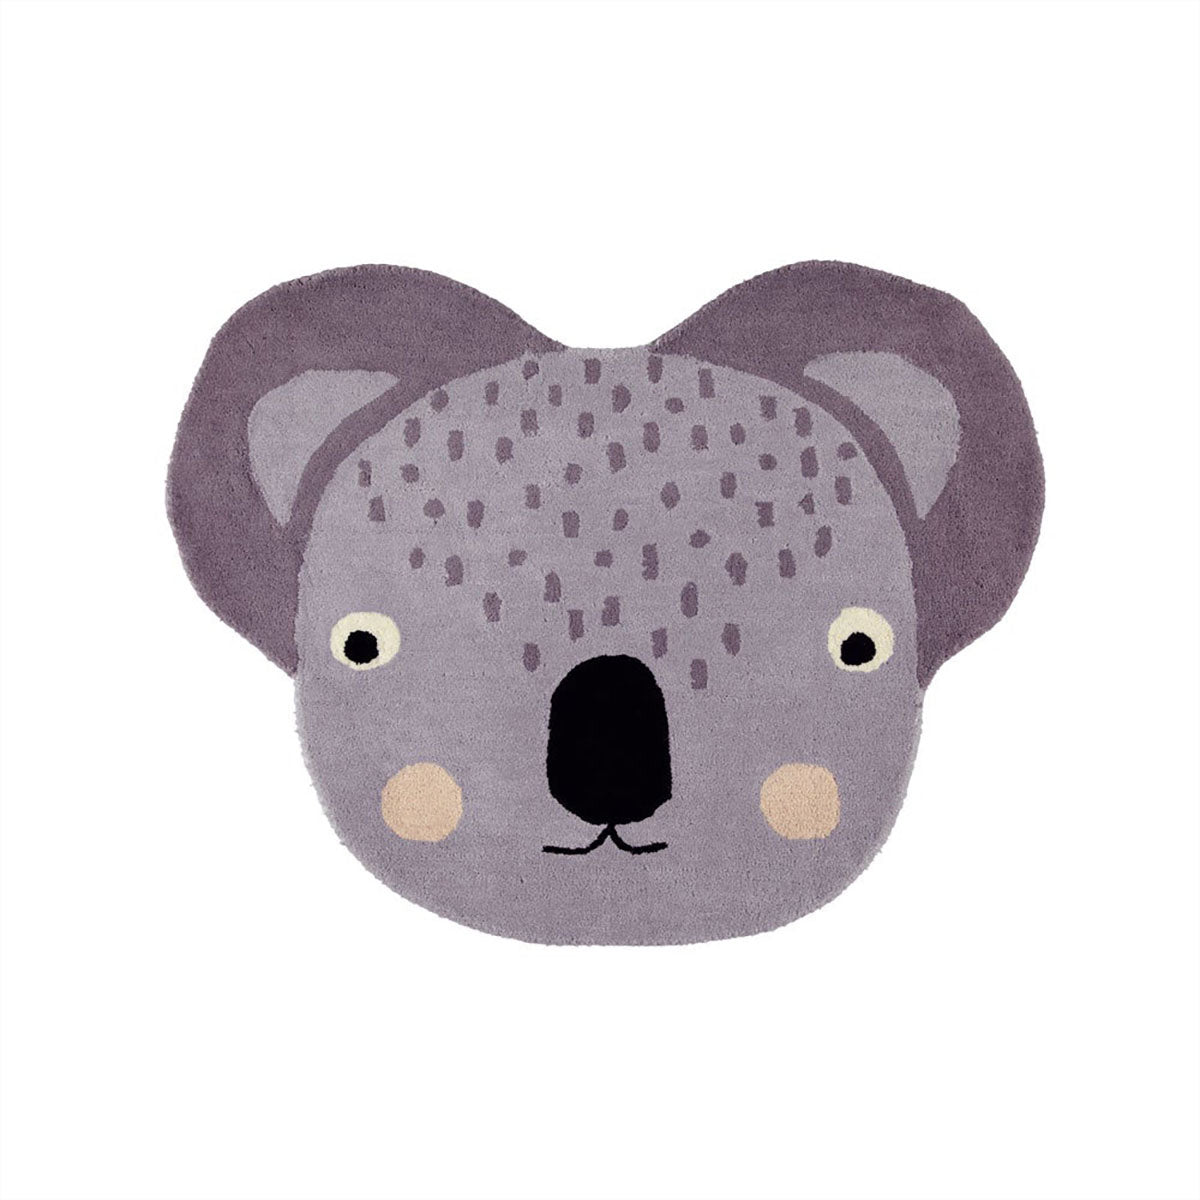 Kinderteppich "Koala" 